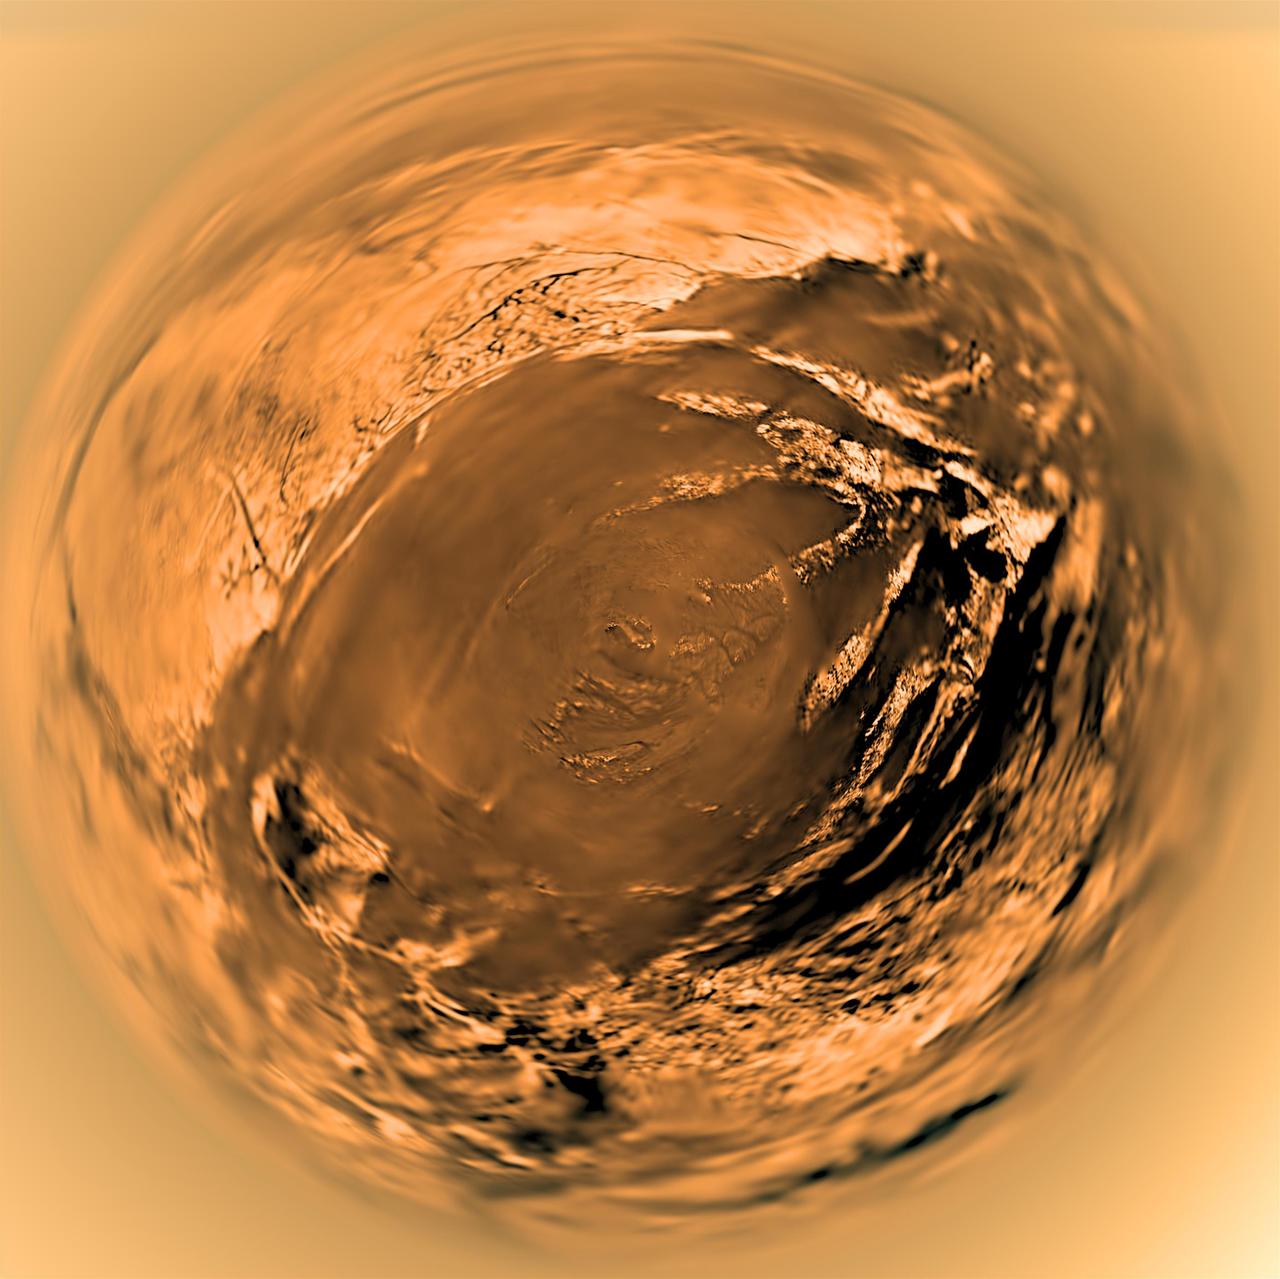 Titan's Surface